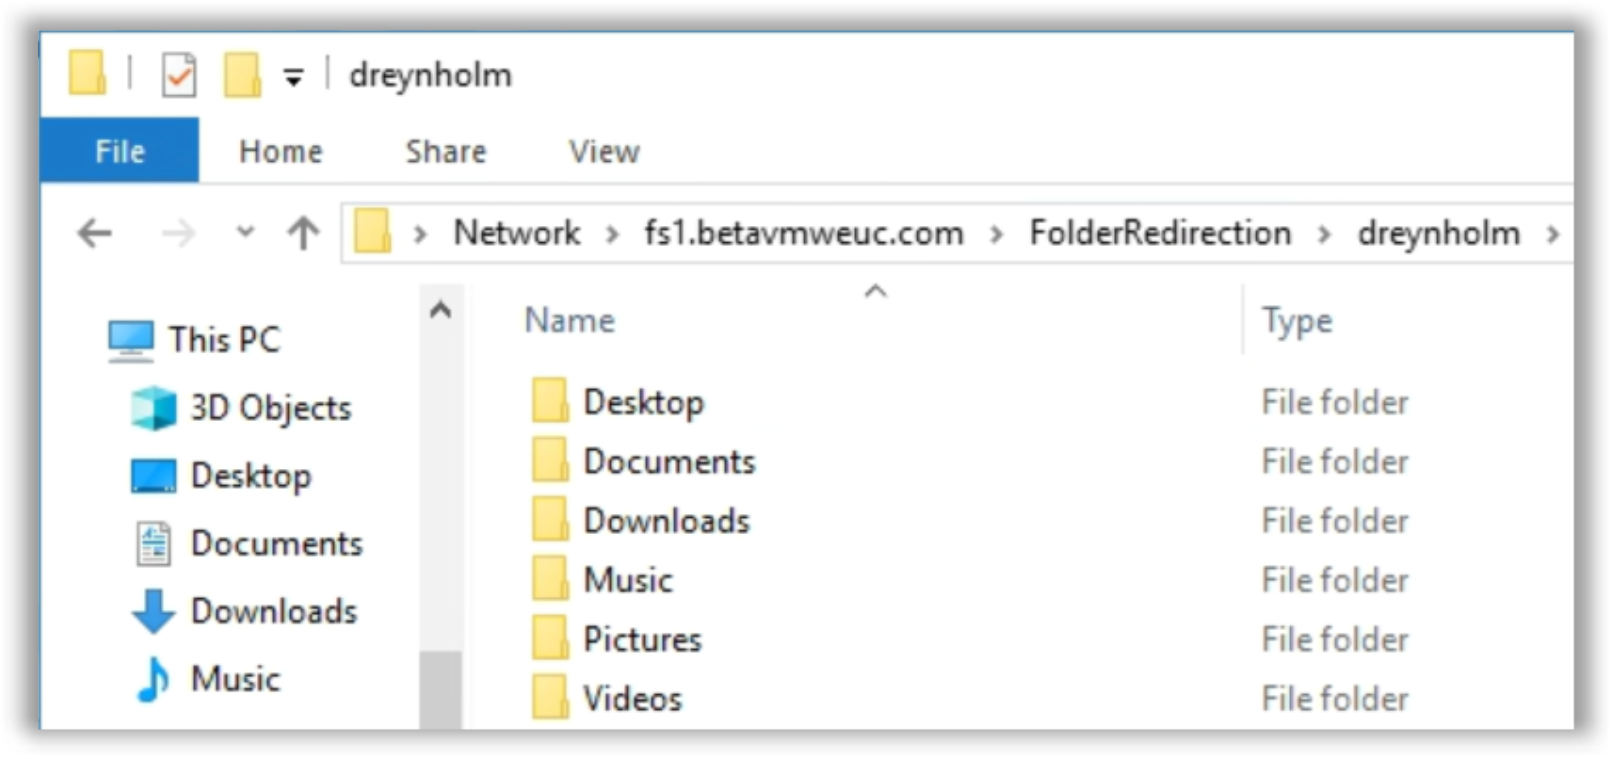 Sample Folder Redirection Share